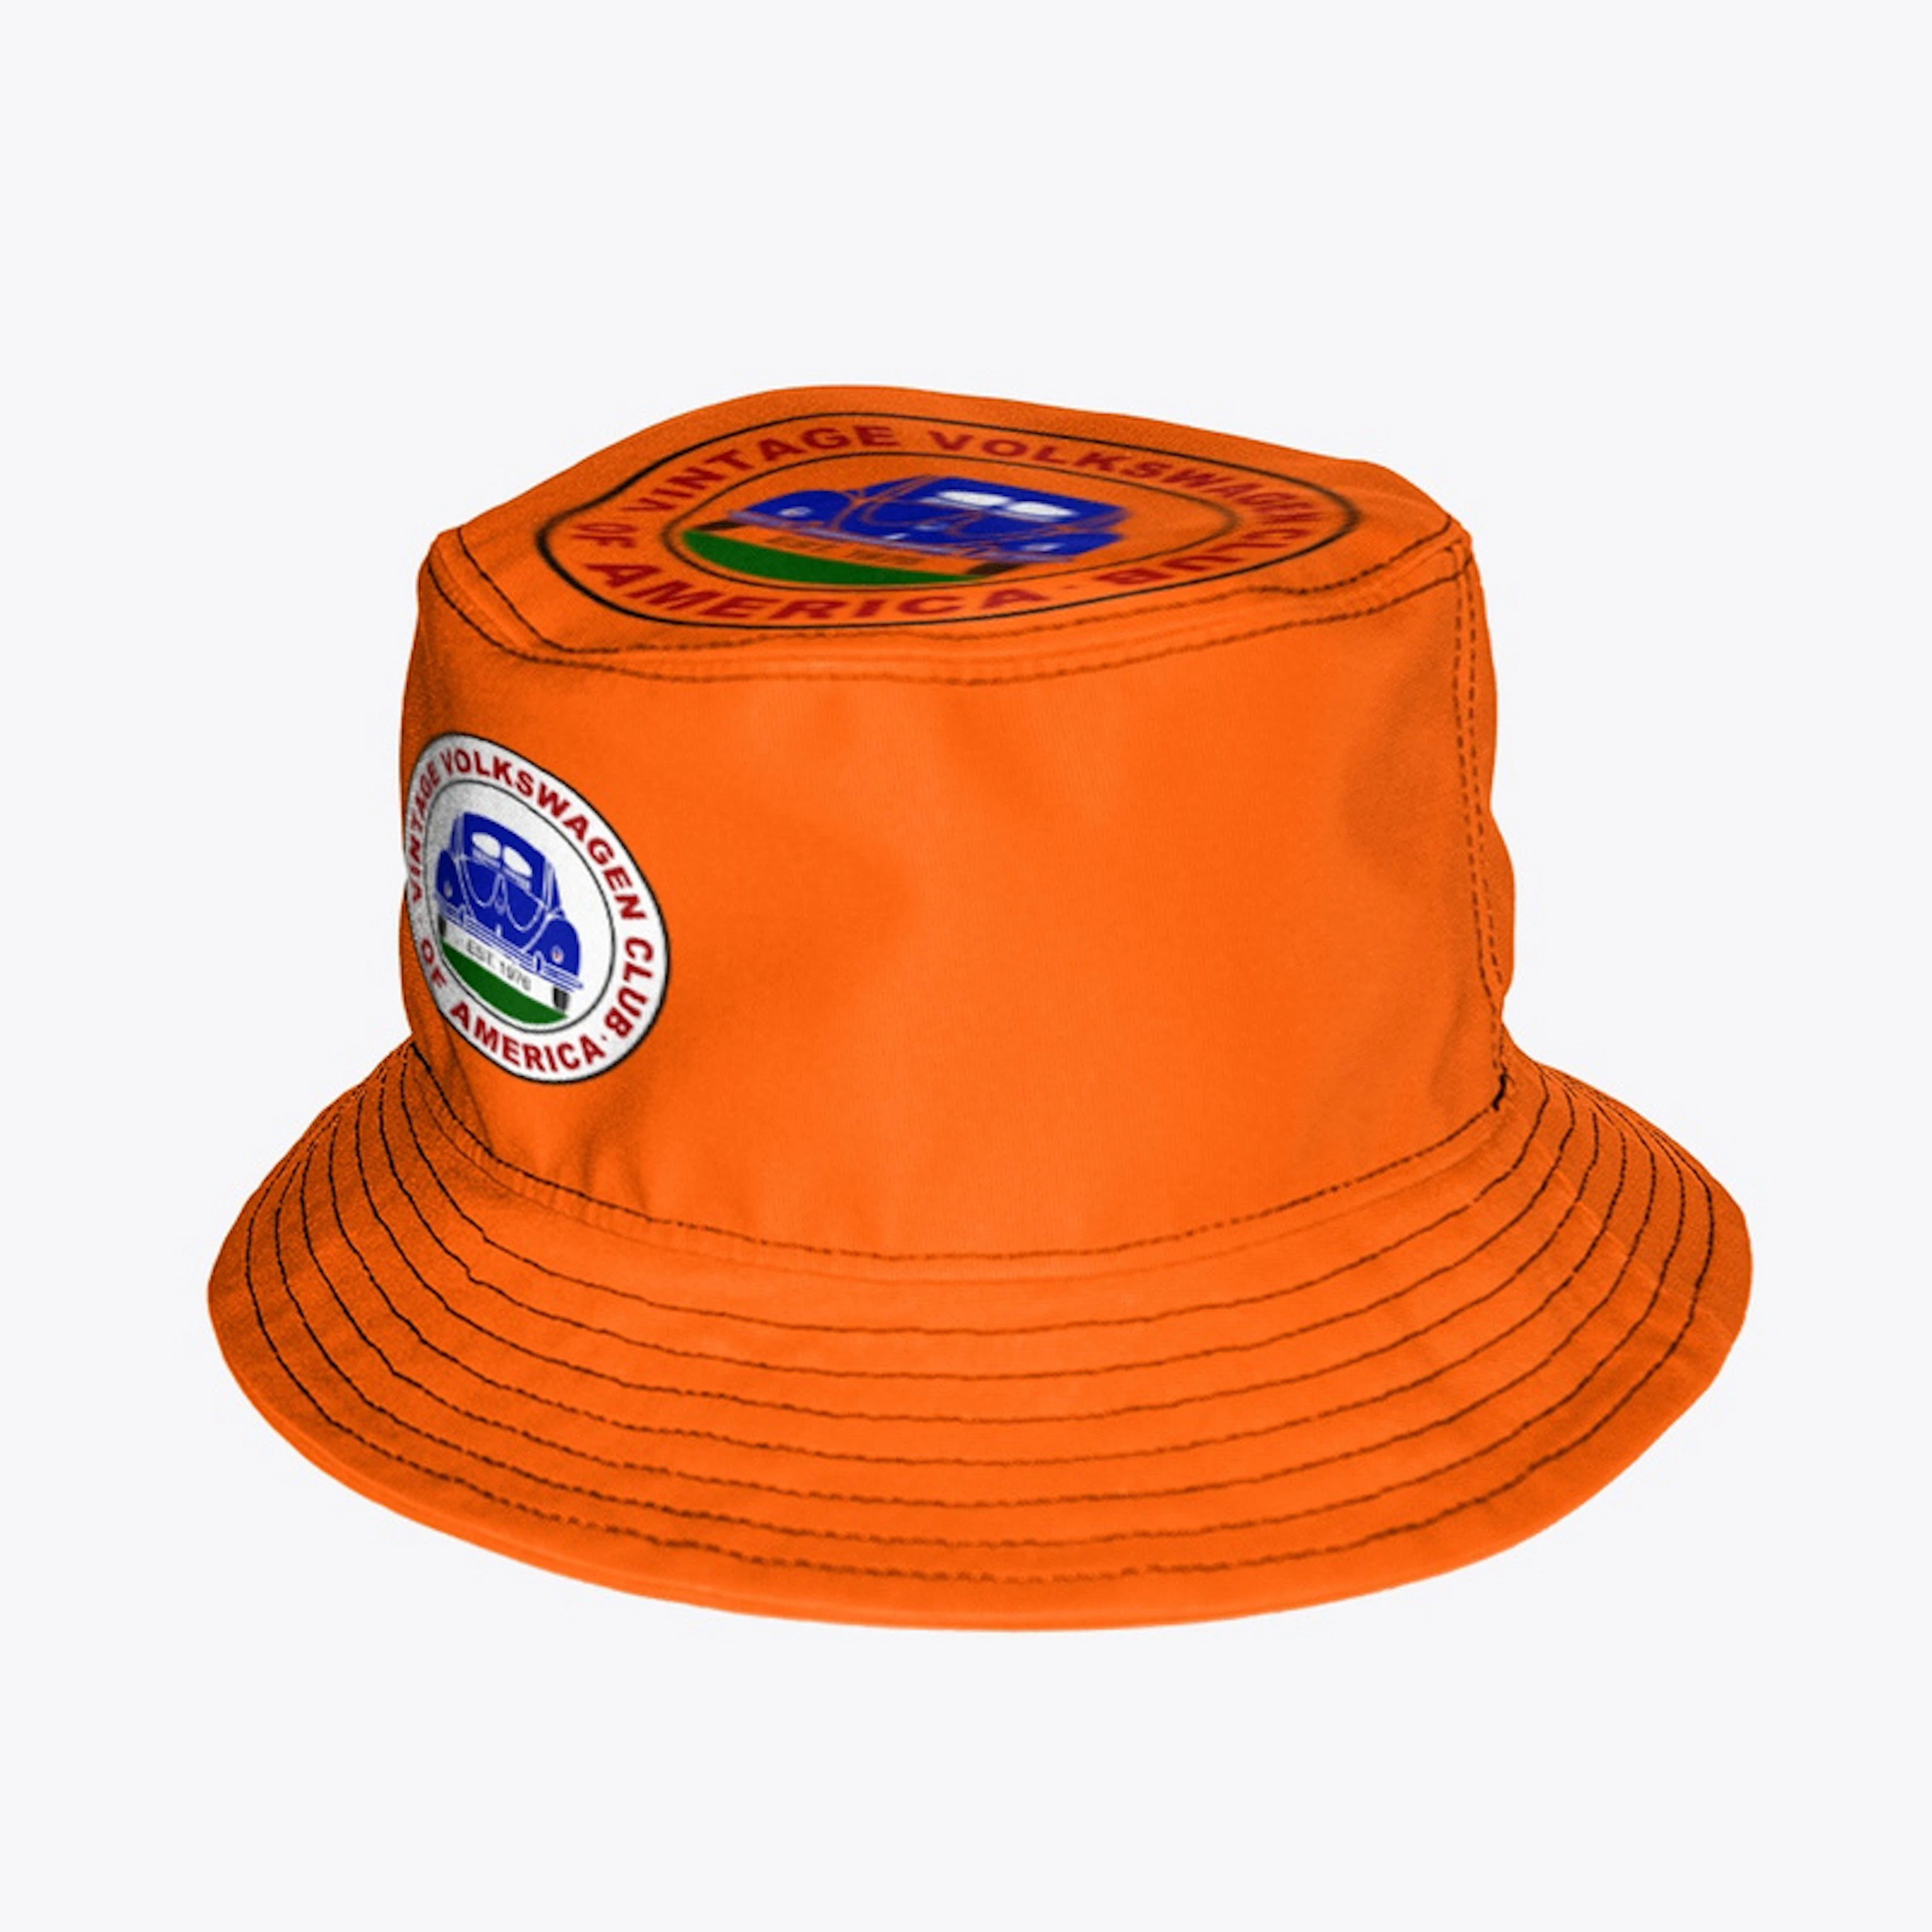 VVWCA bucket hat